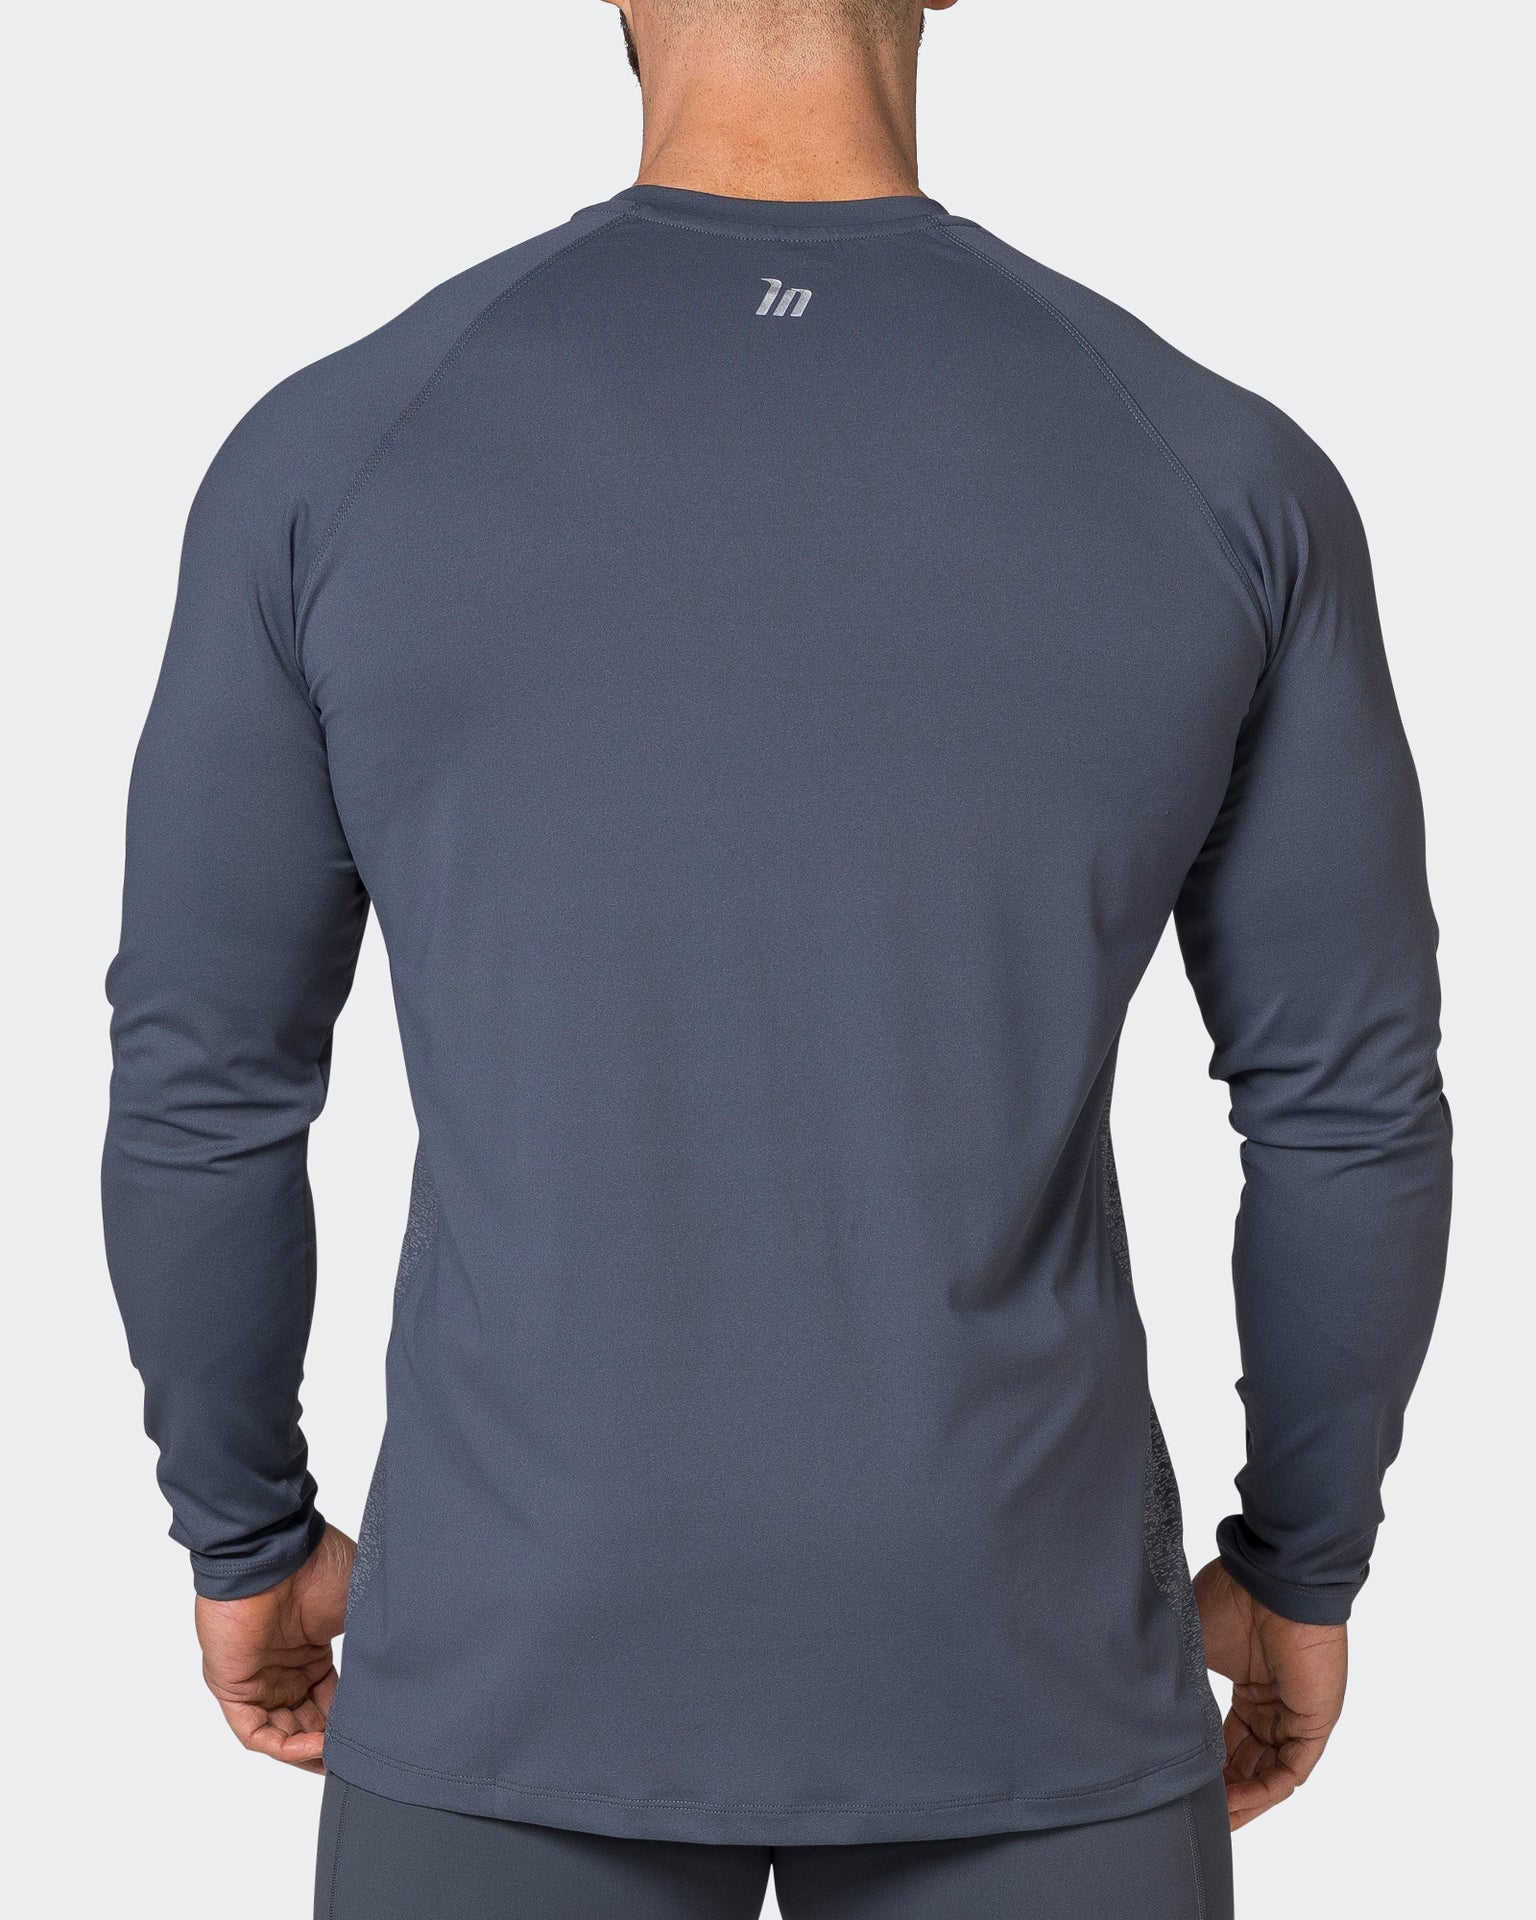 Muscle Nation T-Shirts Reflective Long Sleeve Top - Thunder